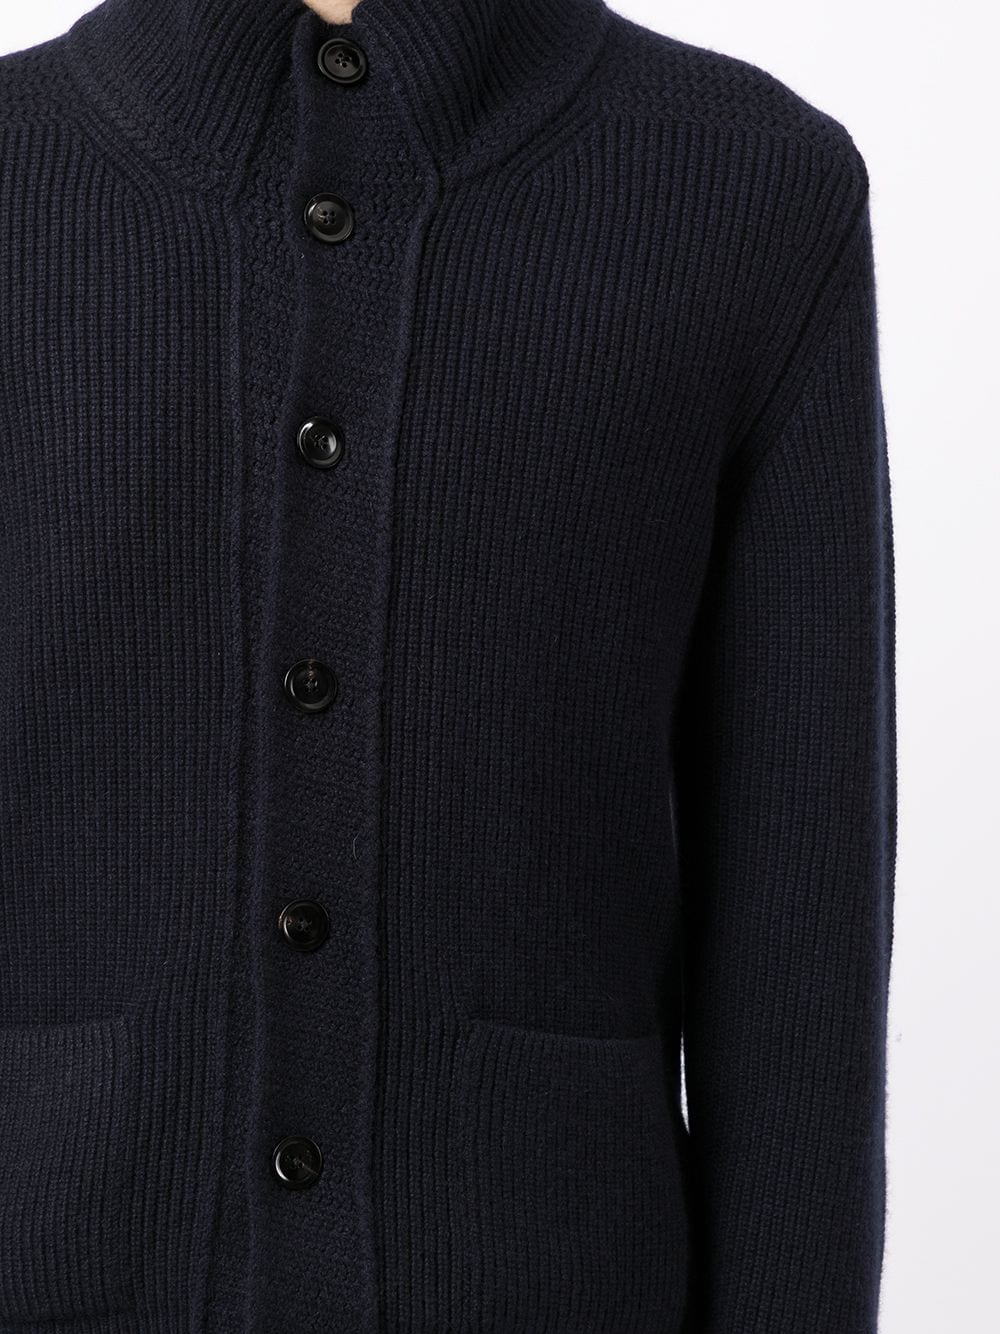 TOM FORD Long Sleeve Knitted Turtleneck Navy Blue - MAISONDEFASHION.COM